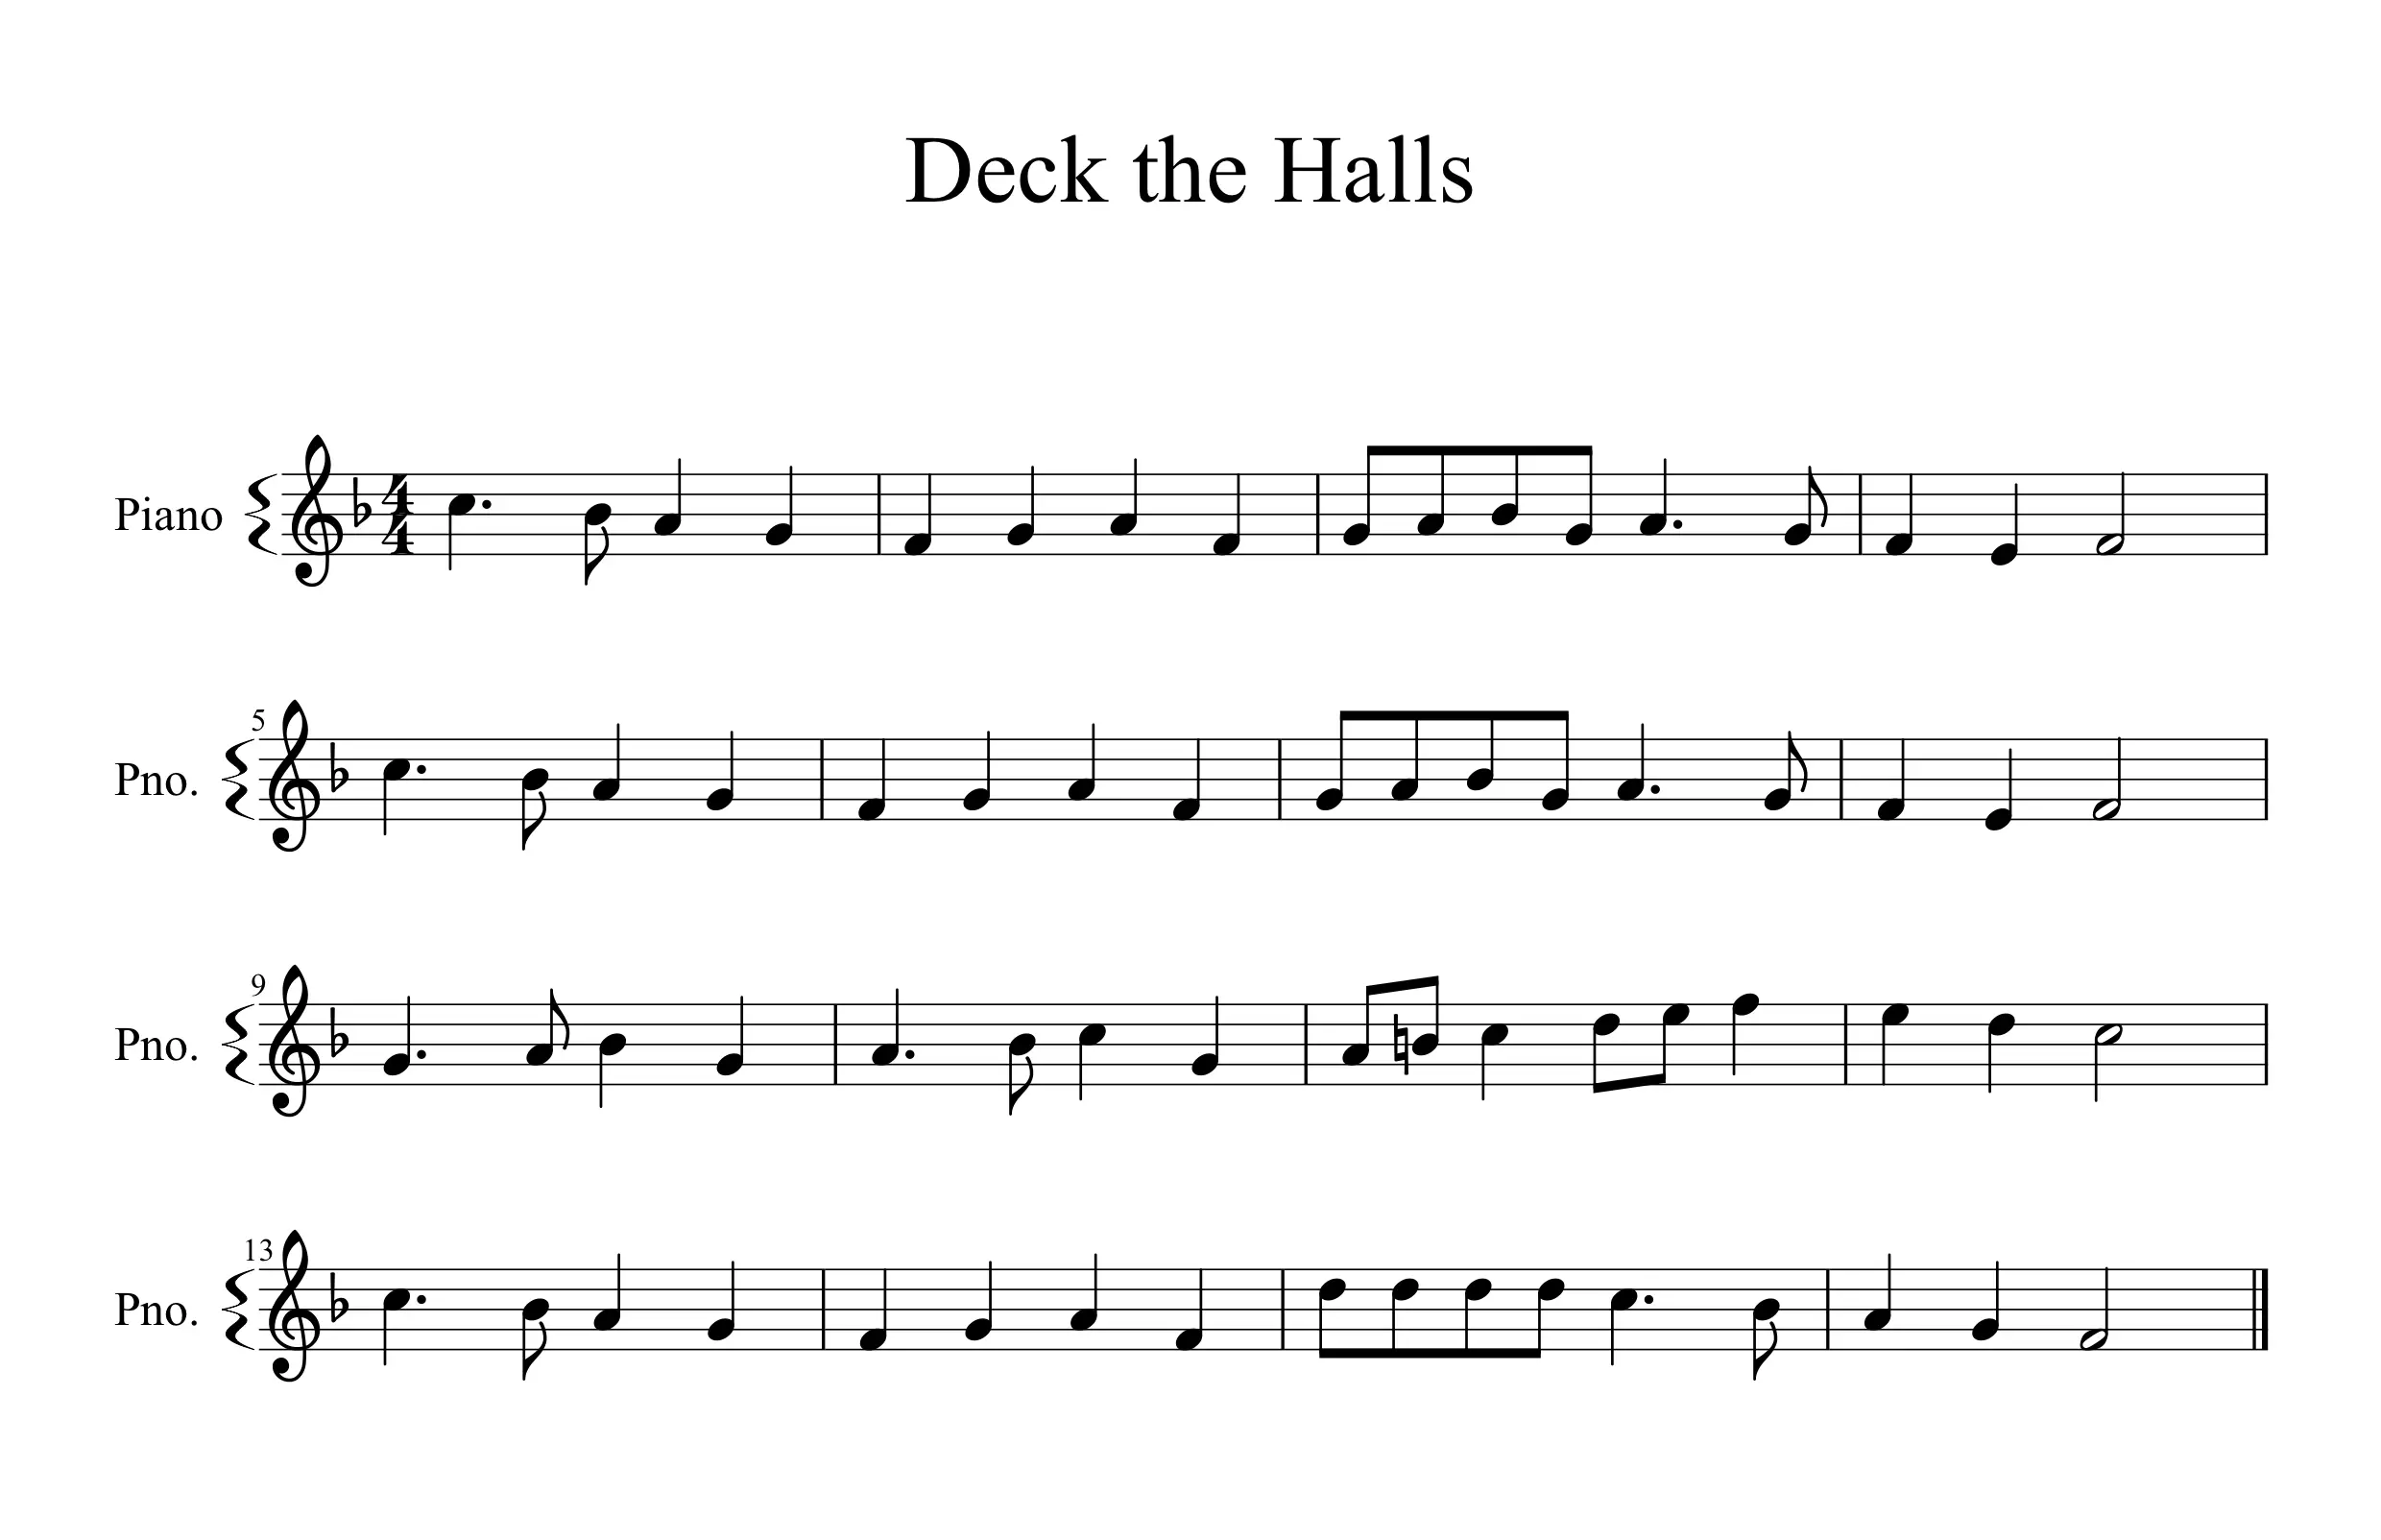 Deck the Halls melody score